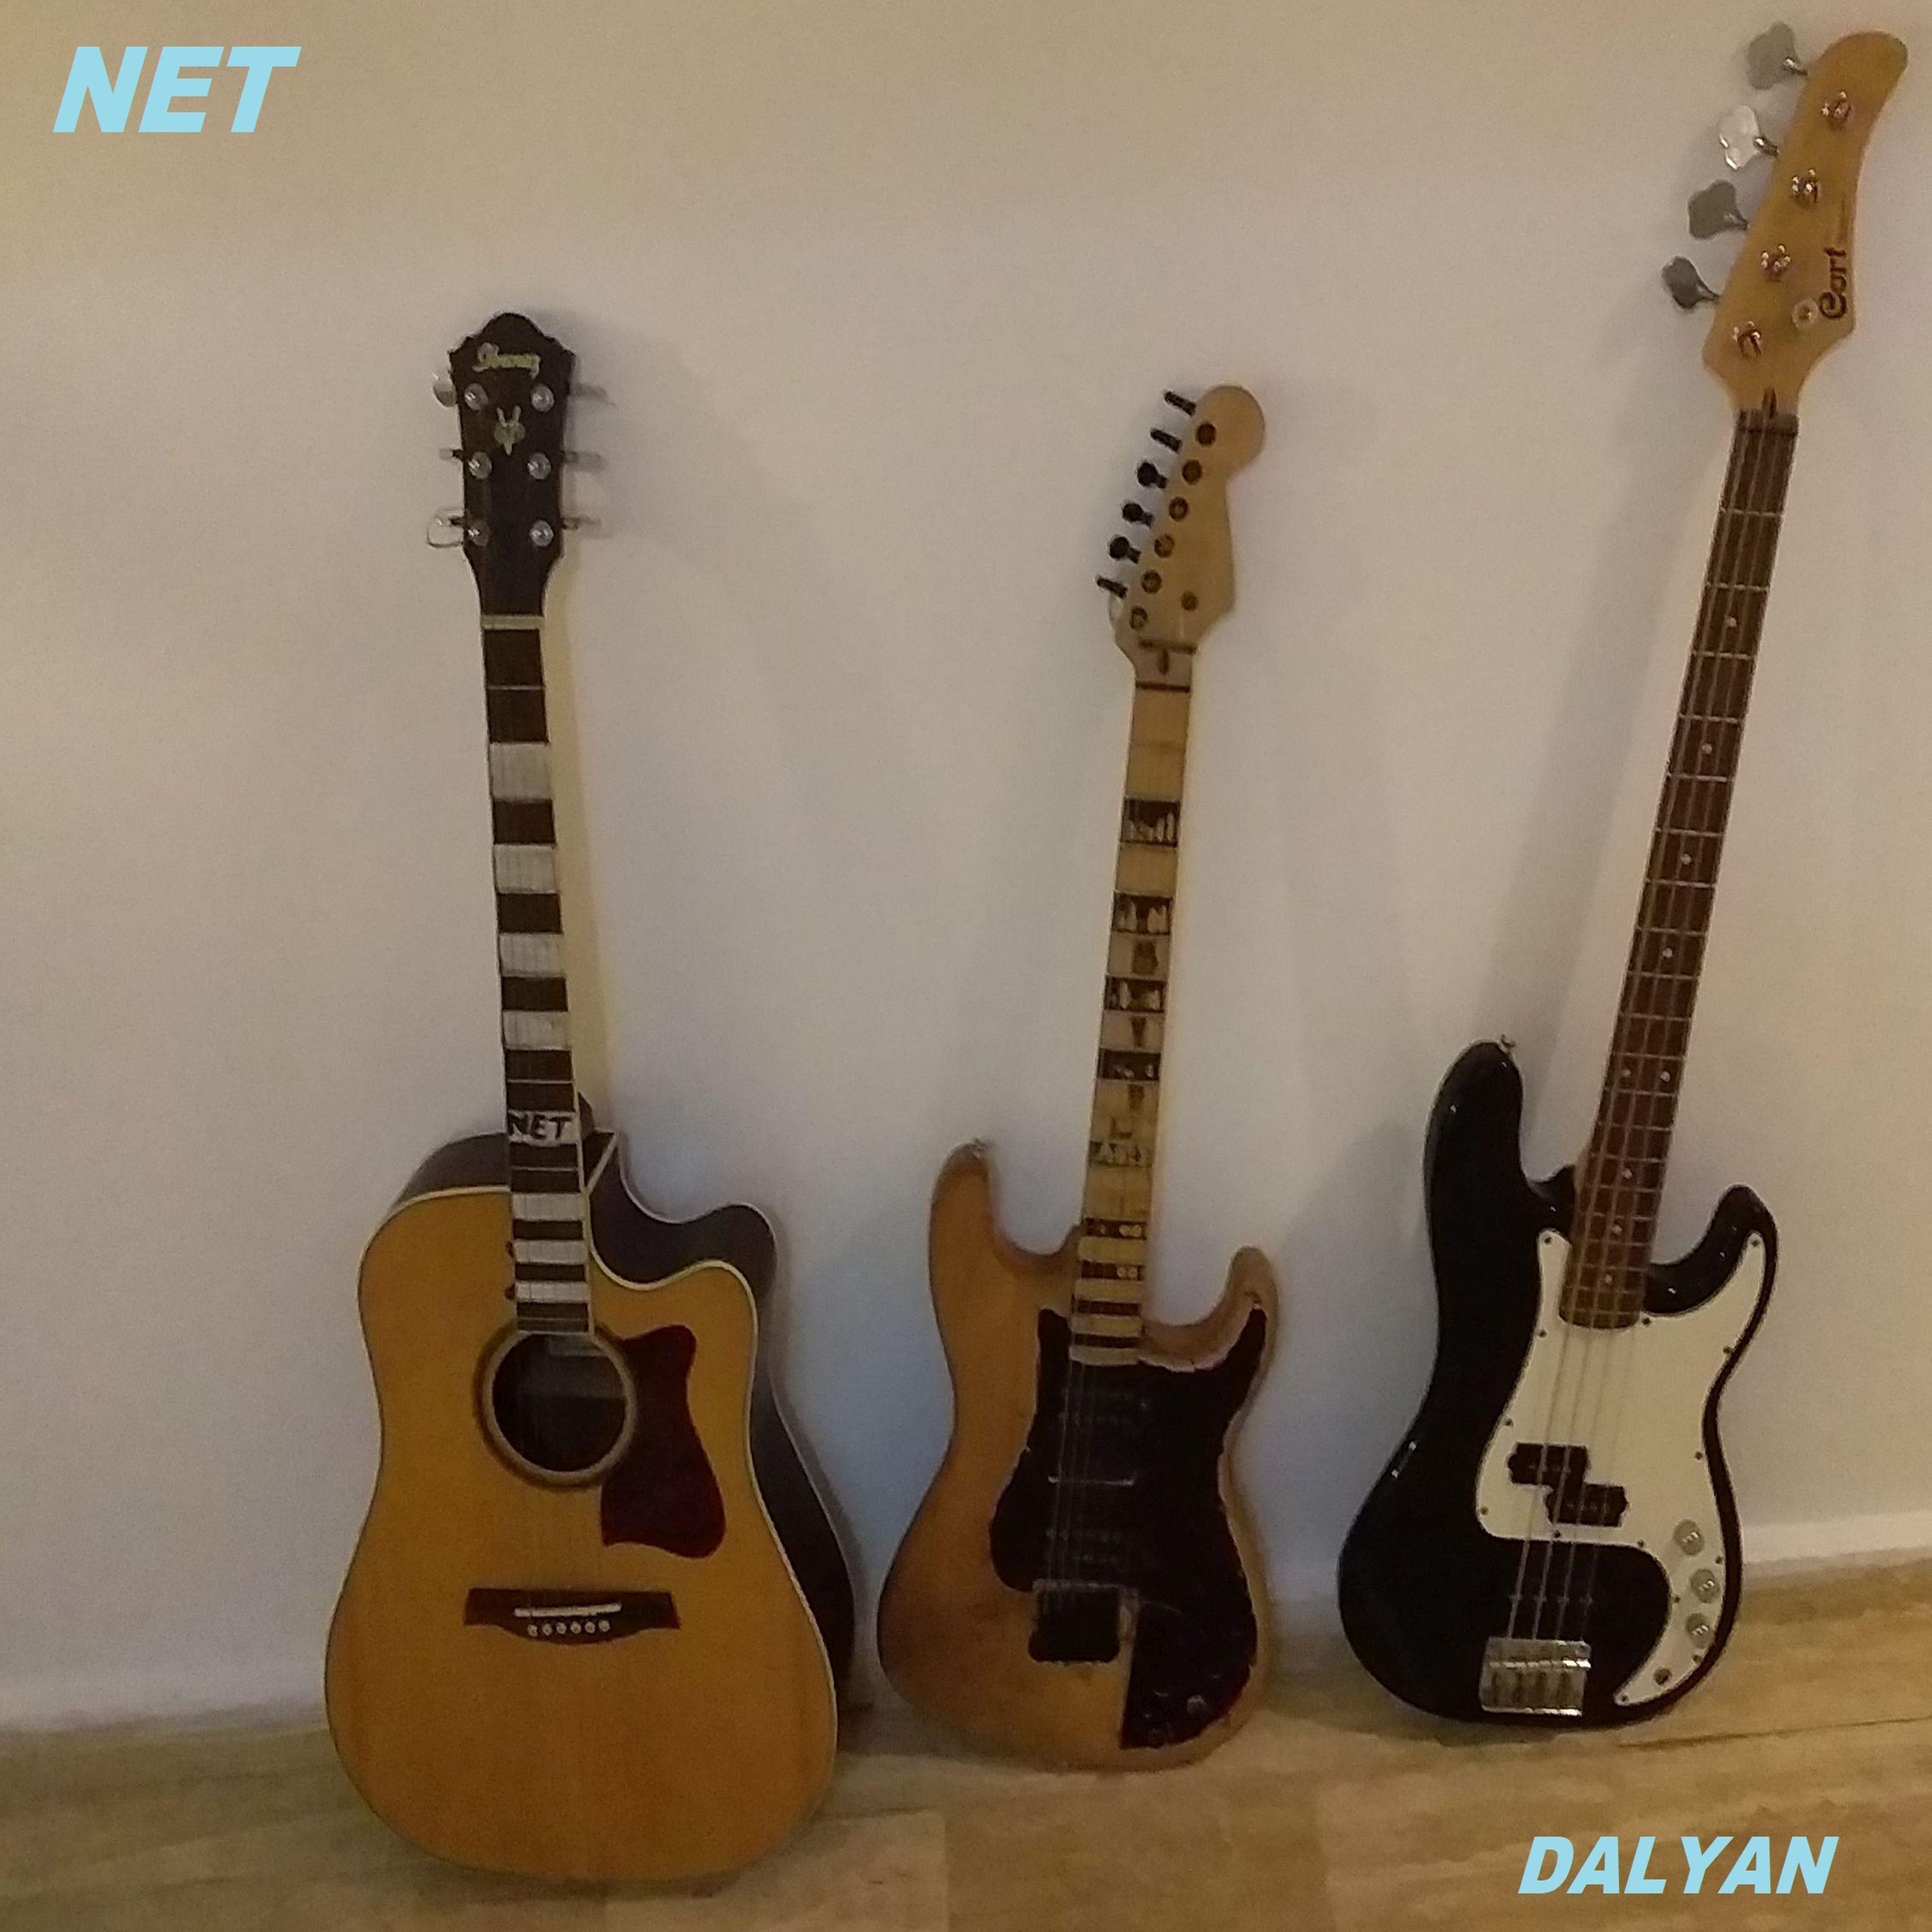 Net - Dalyan (DP)